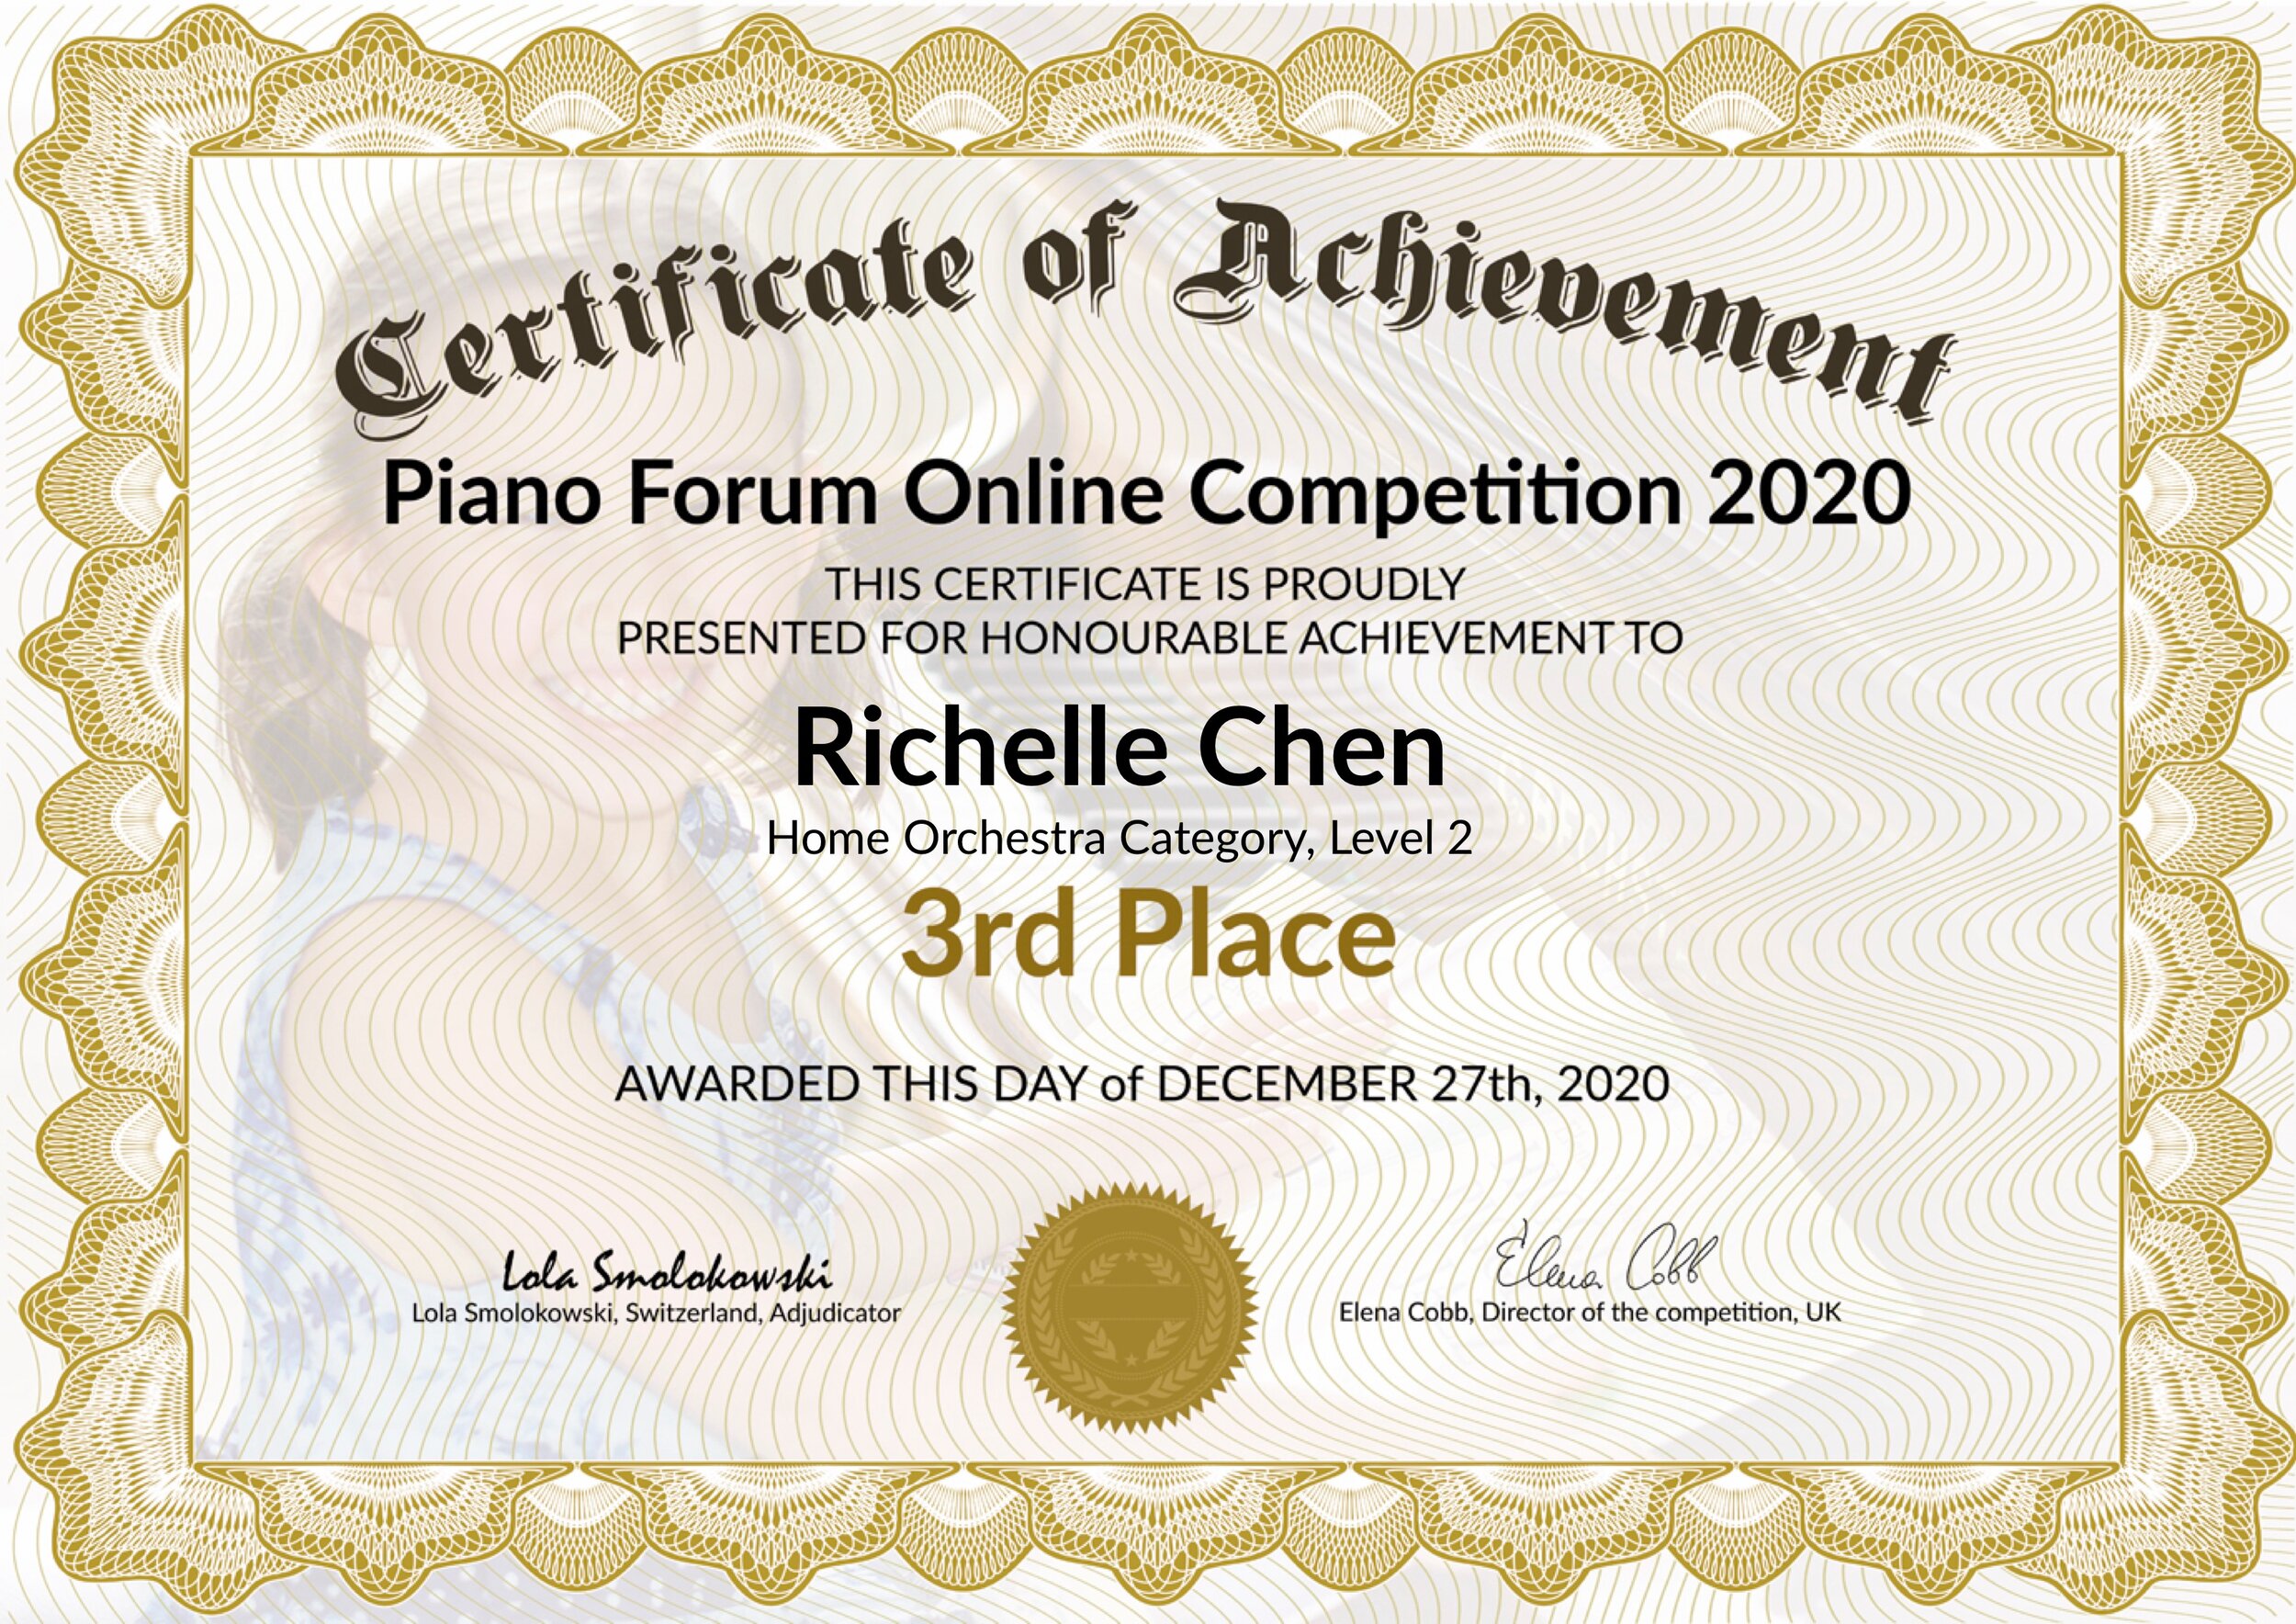 Richelle Chen Certificate.jpeg